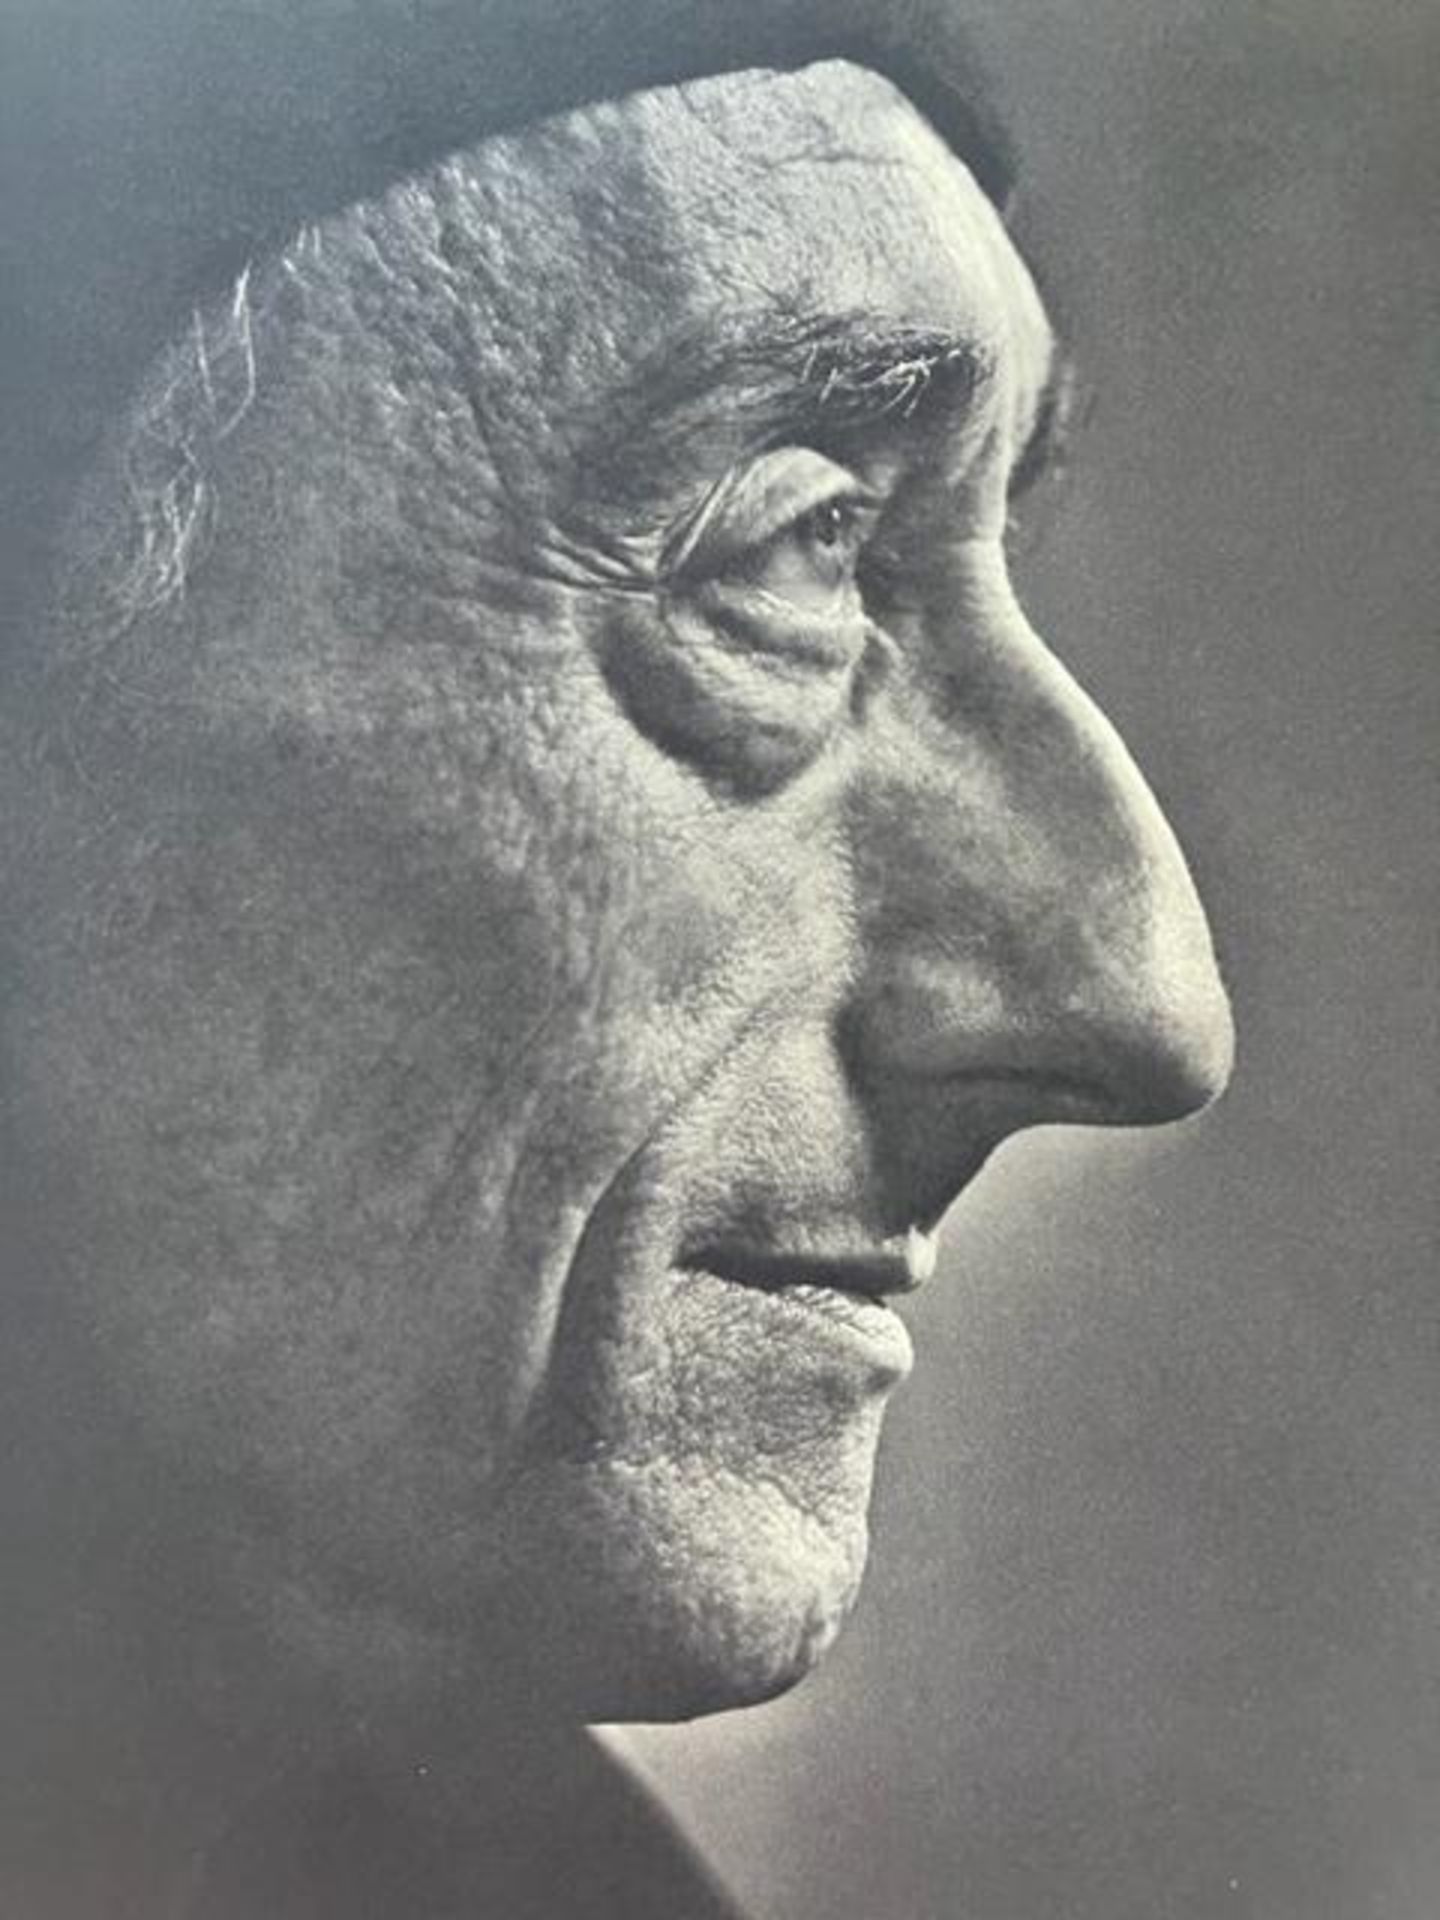 Yousuf Karsh "Jacques Cousteau" Print.